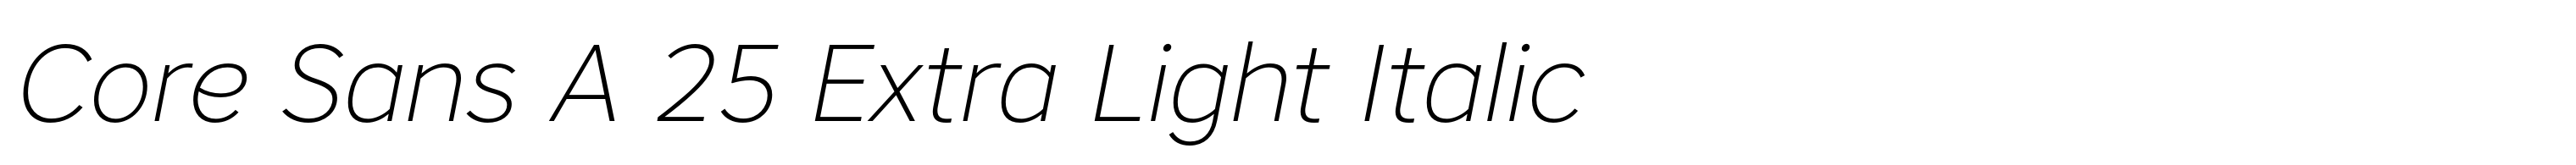 Core Sans A 25 Extra Light Italic